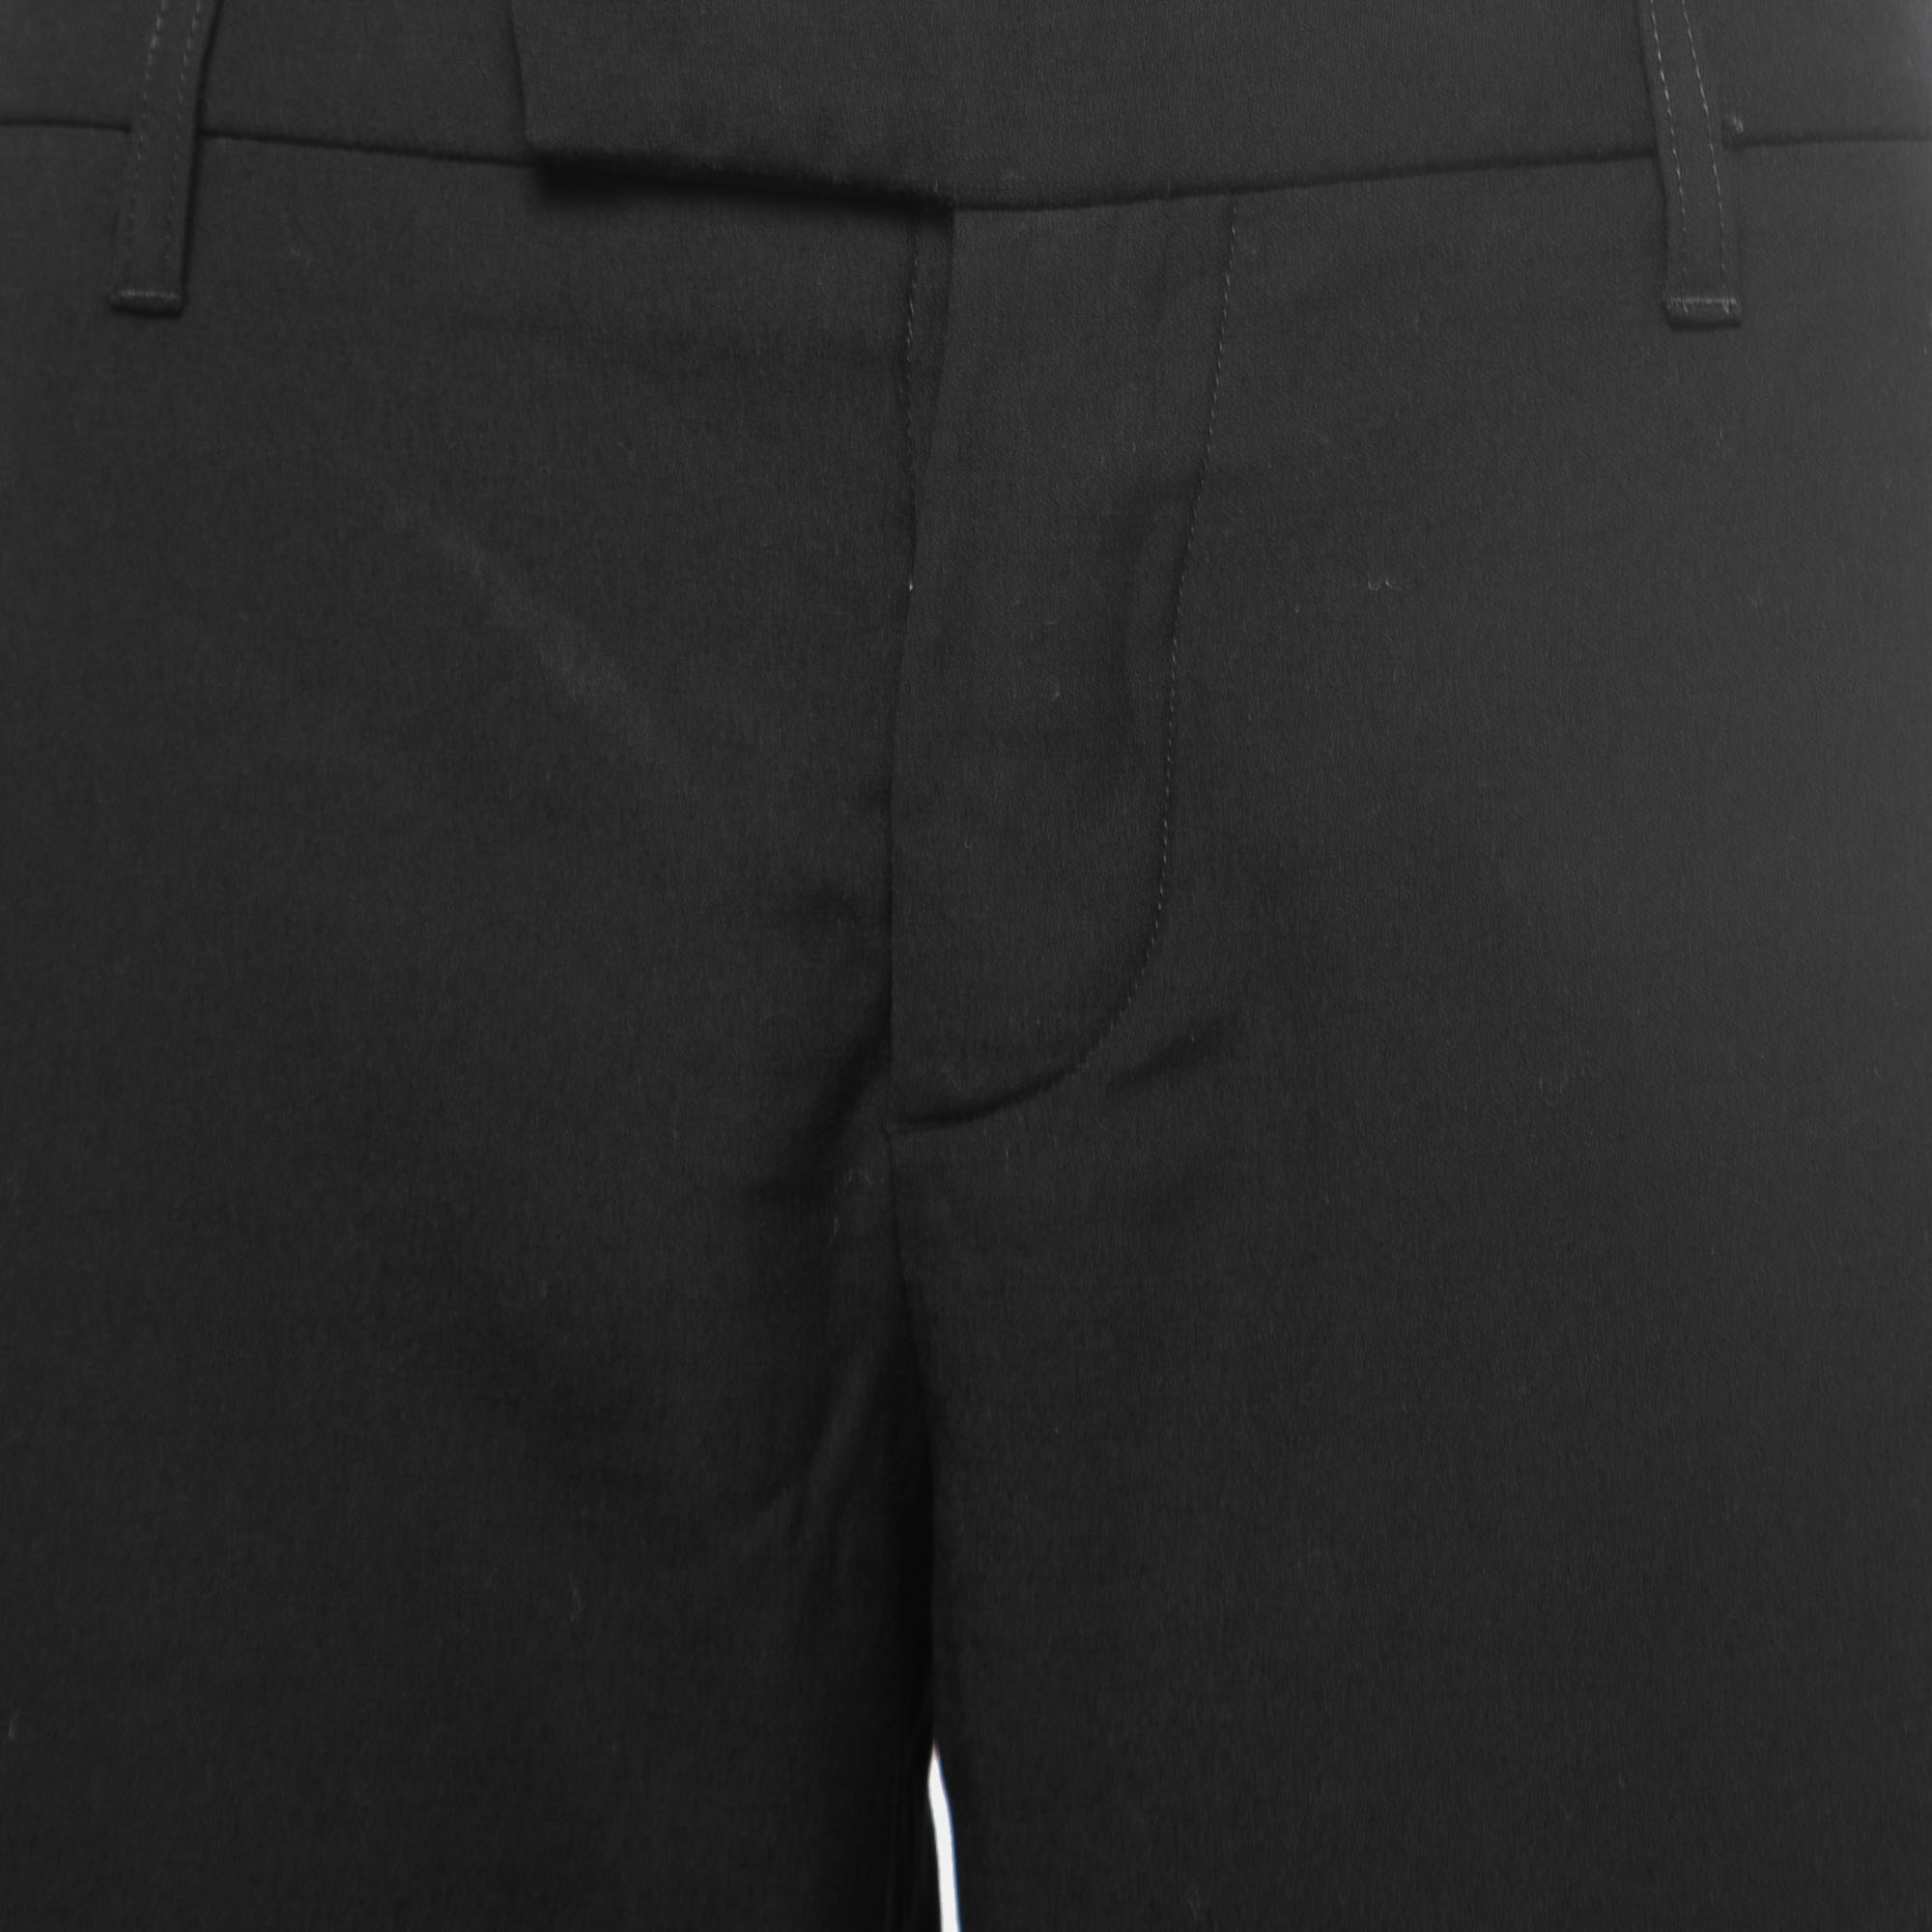 Marni Black Wool Bermuda Shorts M